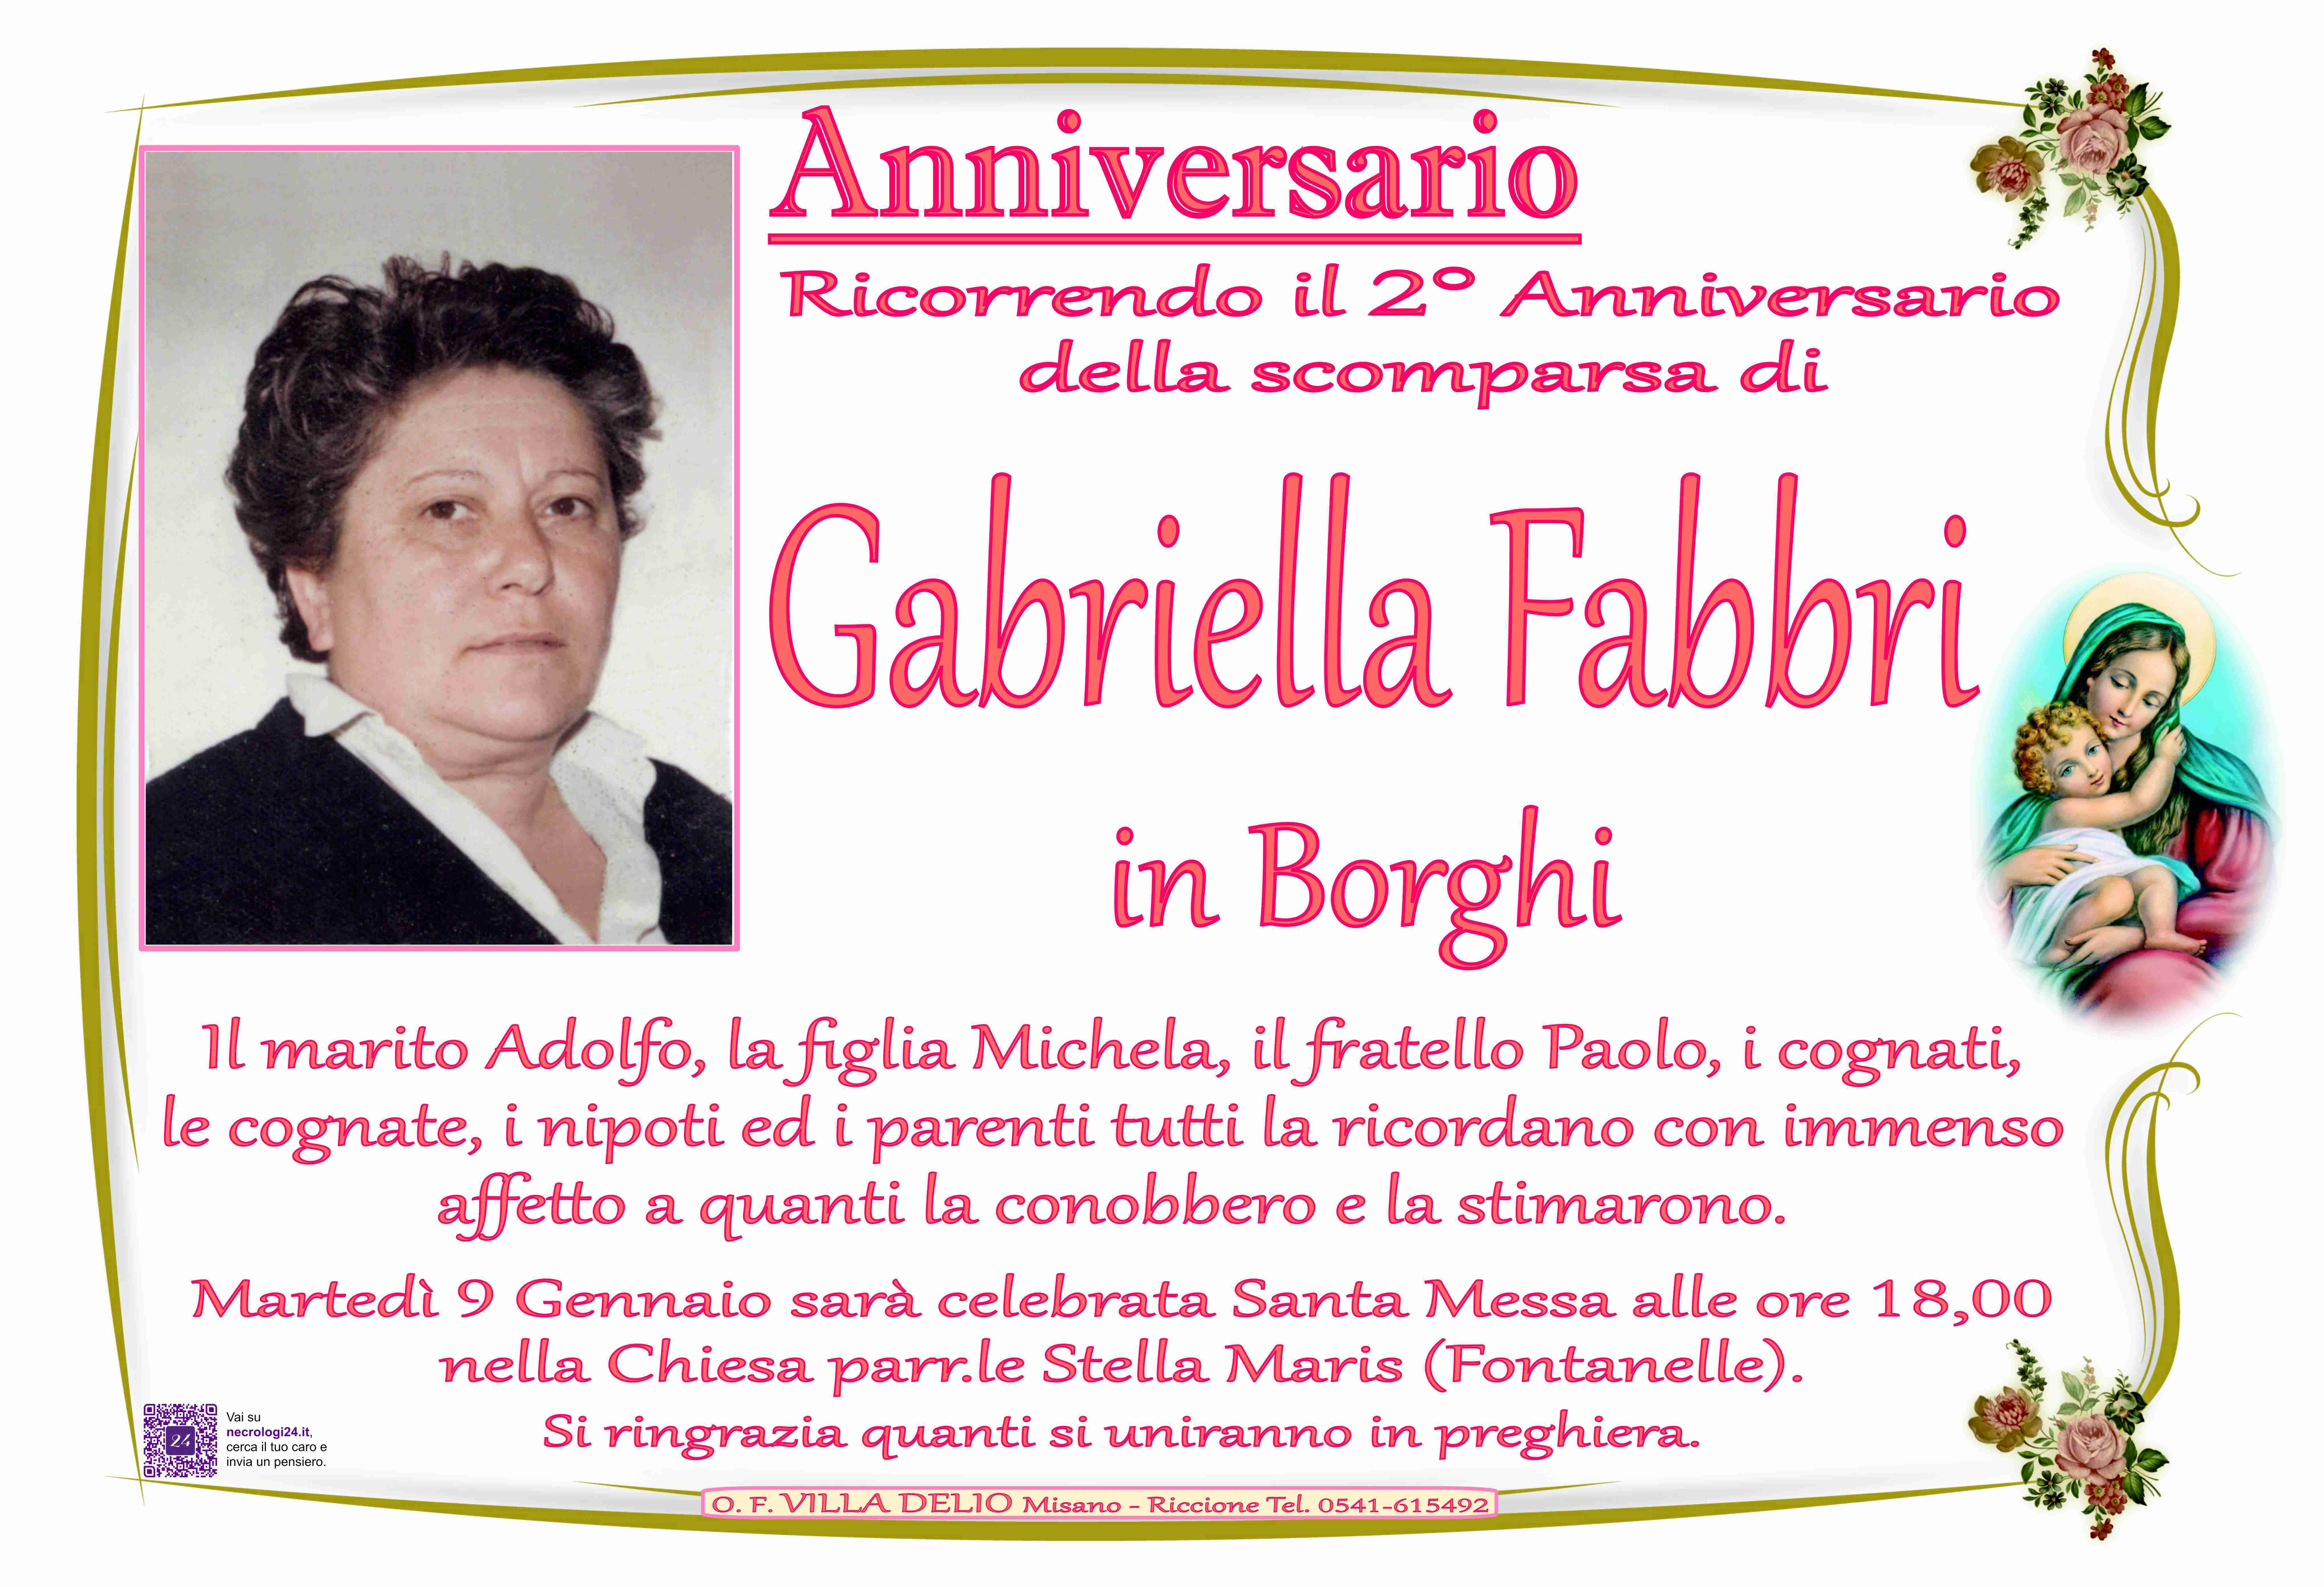 Gabriella Fabbri in Borghi